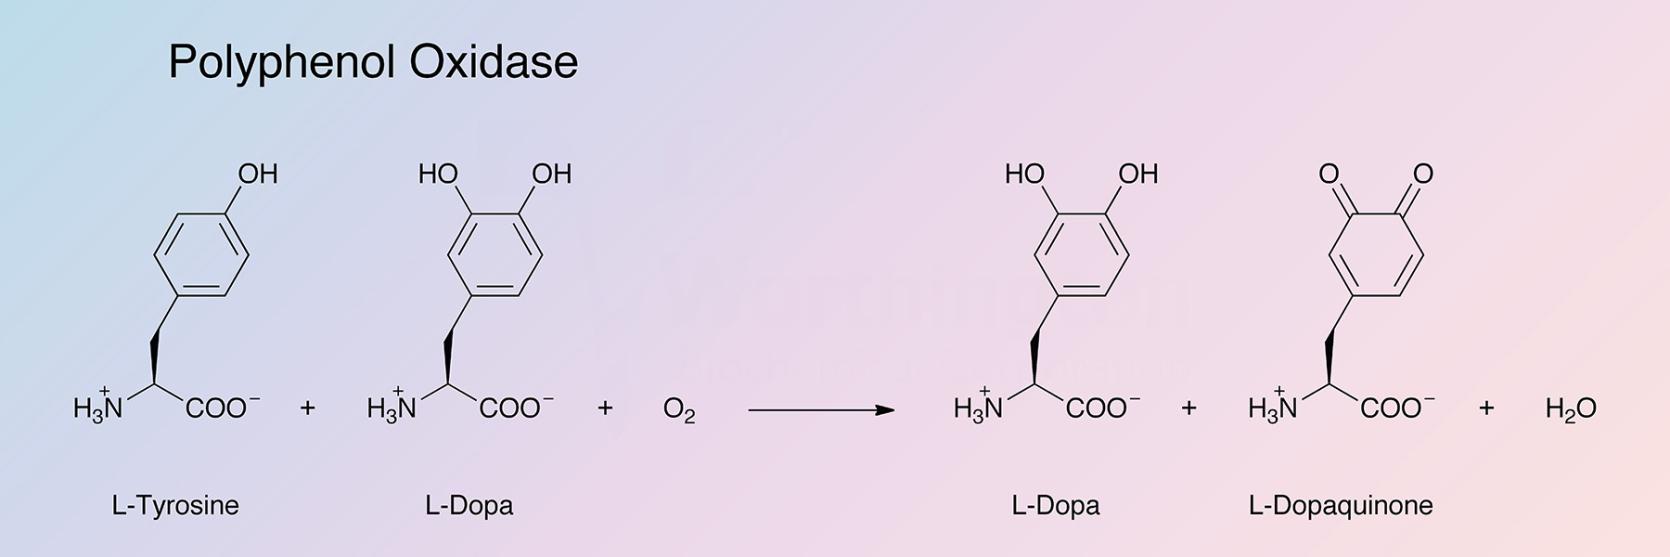 Polyphenol Oxidase Enzymatic Reaction